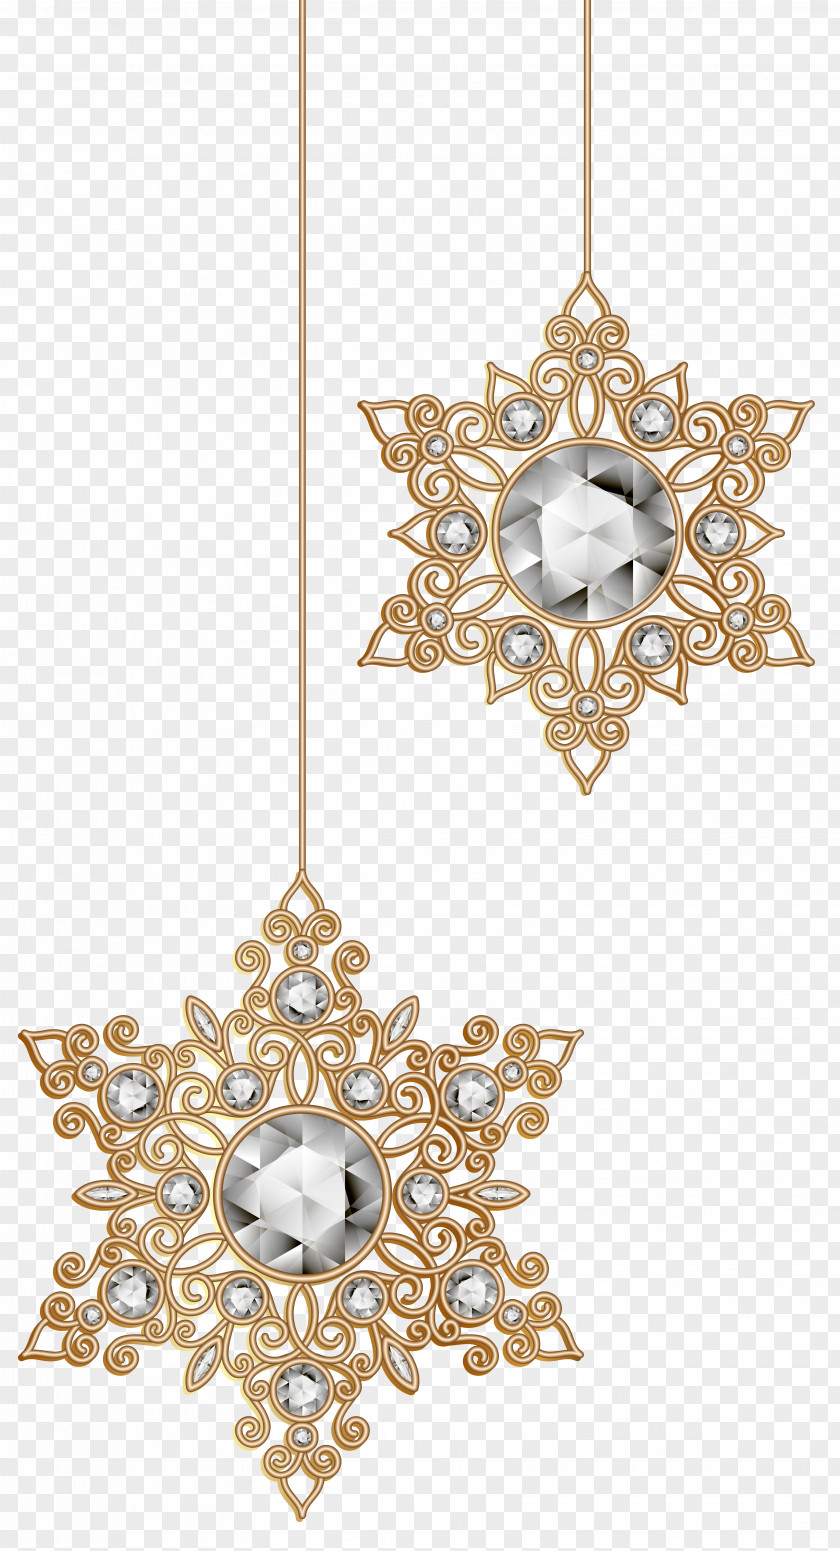 Snowflake Christmas Ornament Clip Art Image PNG